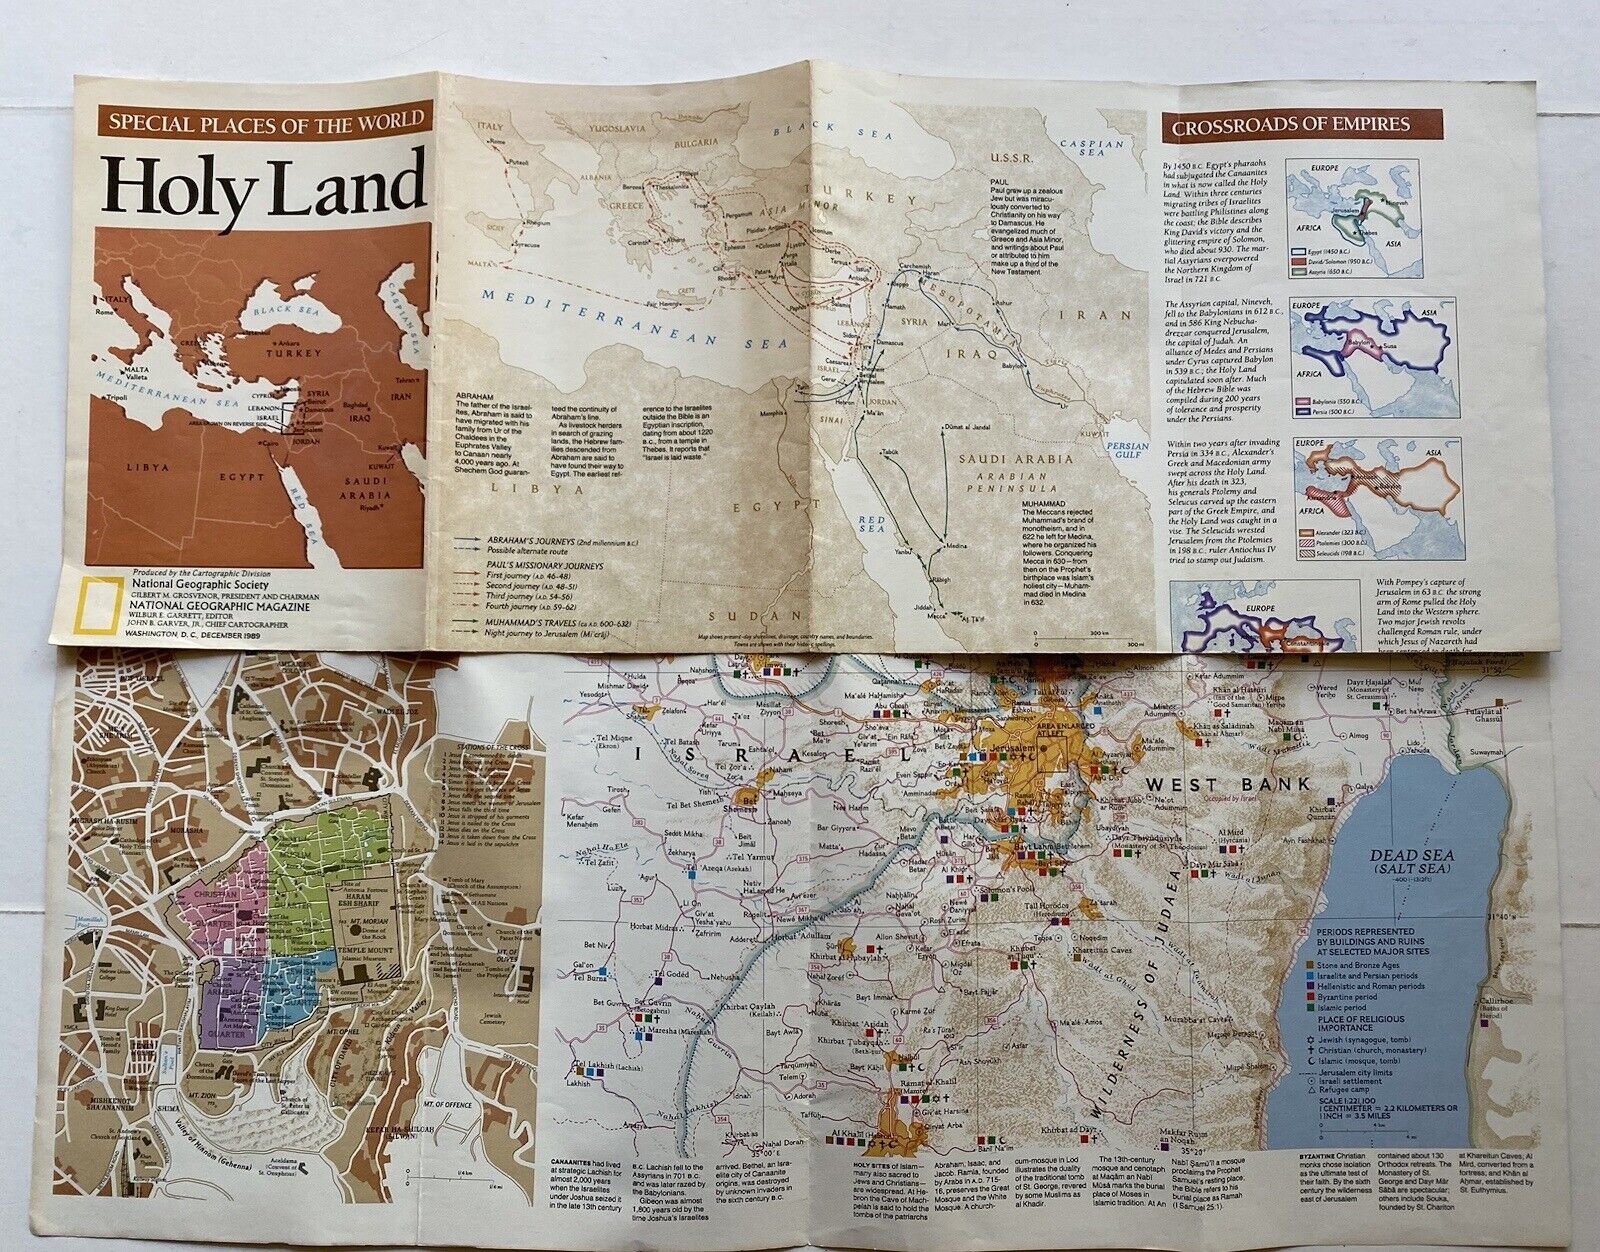 1989 MAP - SPECIAL PLACES OF THE WORLD - HOLY LAND Israel, Gaza, Jordan, Lebanon